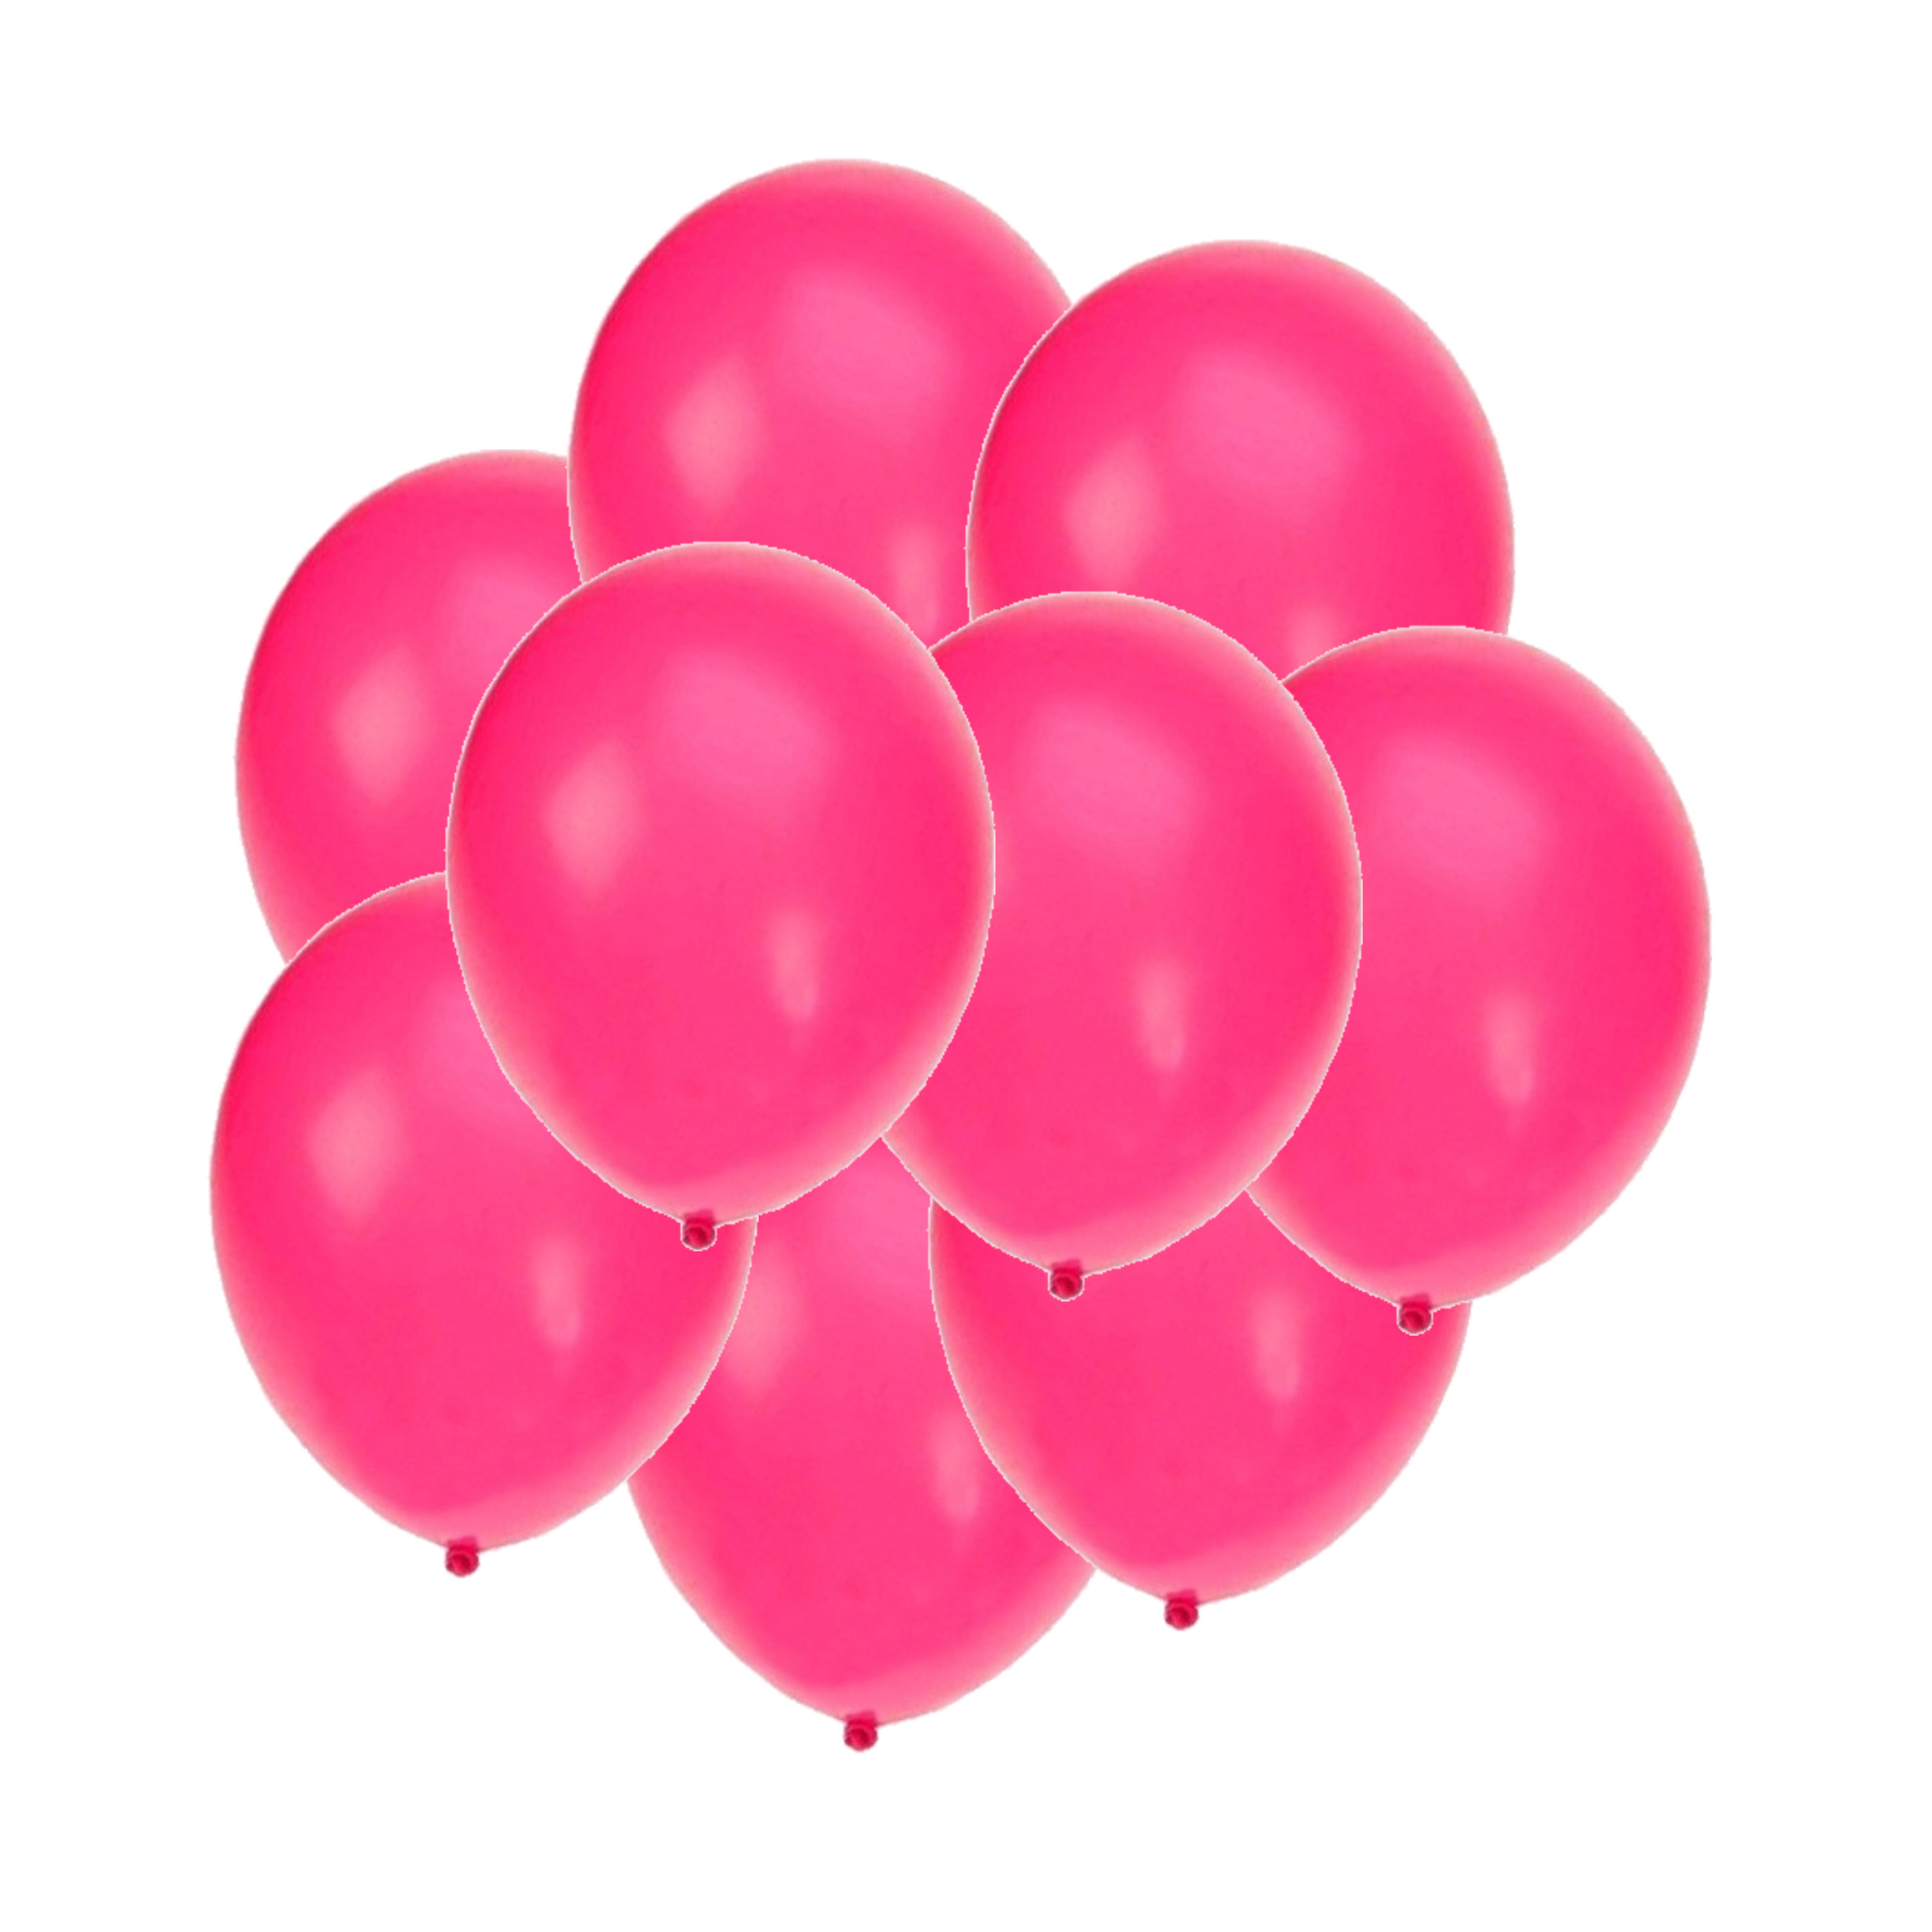 Bellatio decorations - Ballonnen knalroze/felroze 100x stuks rond 27 cm -